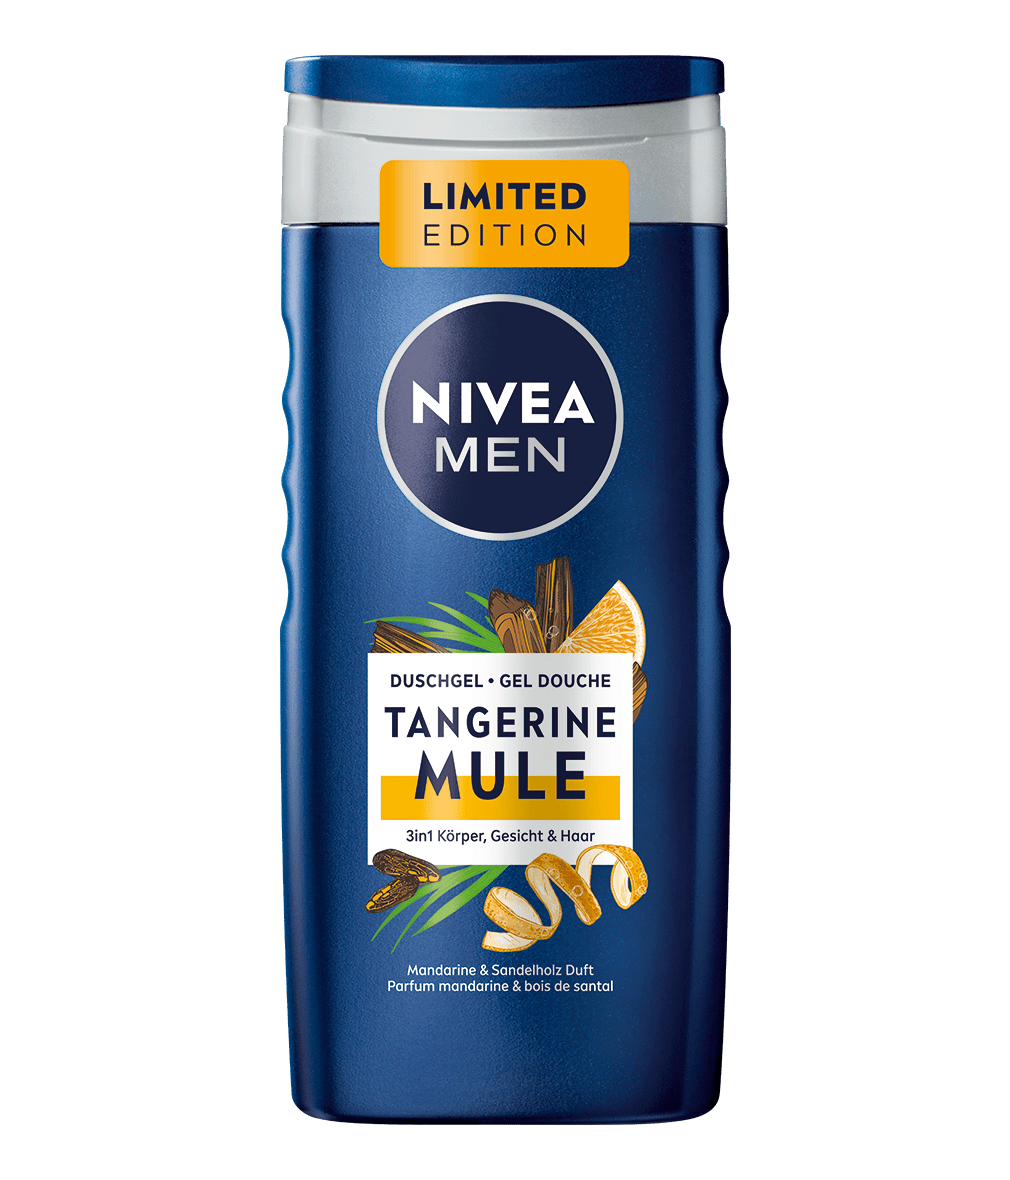 NIVEA MEN Tangerine Mule Duschgel Limited Edition_250ml